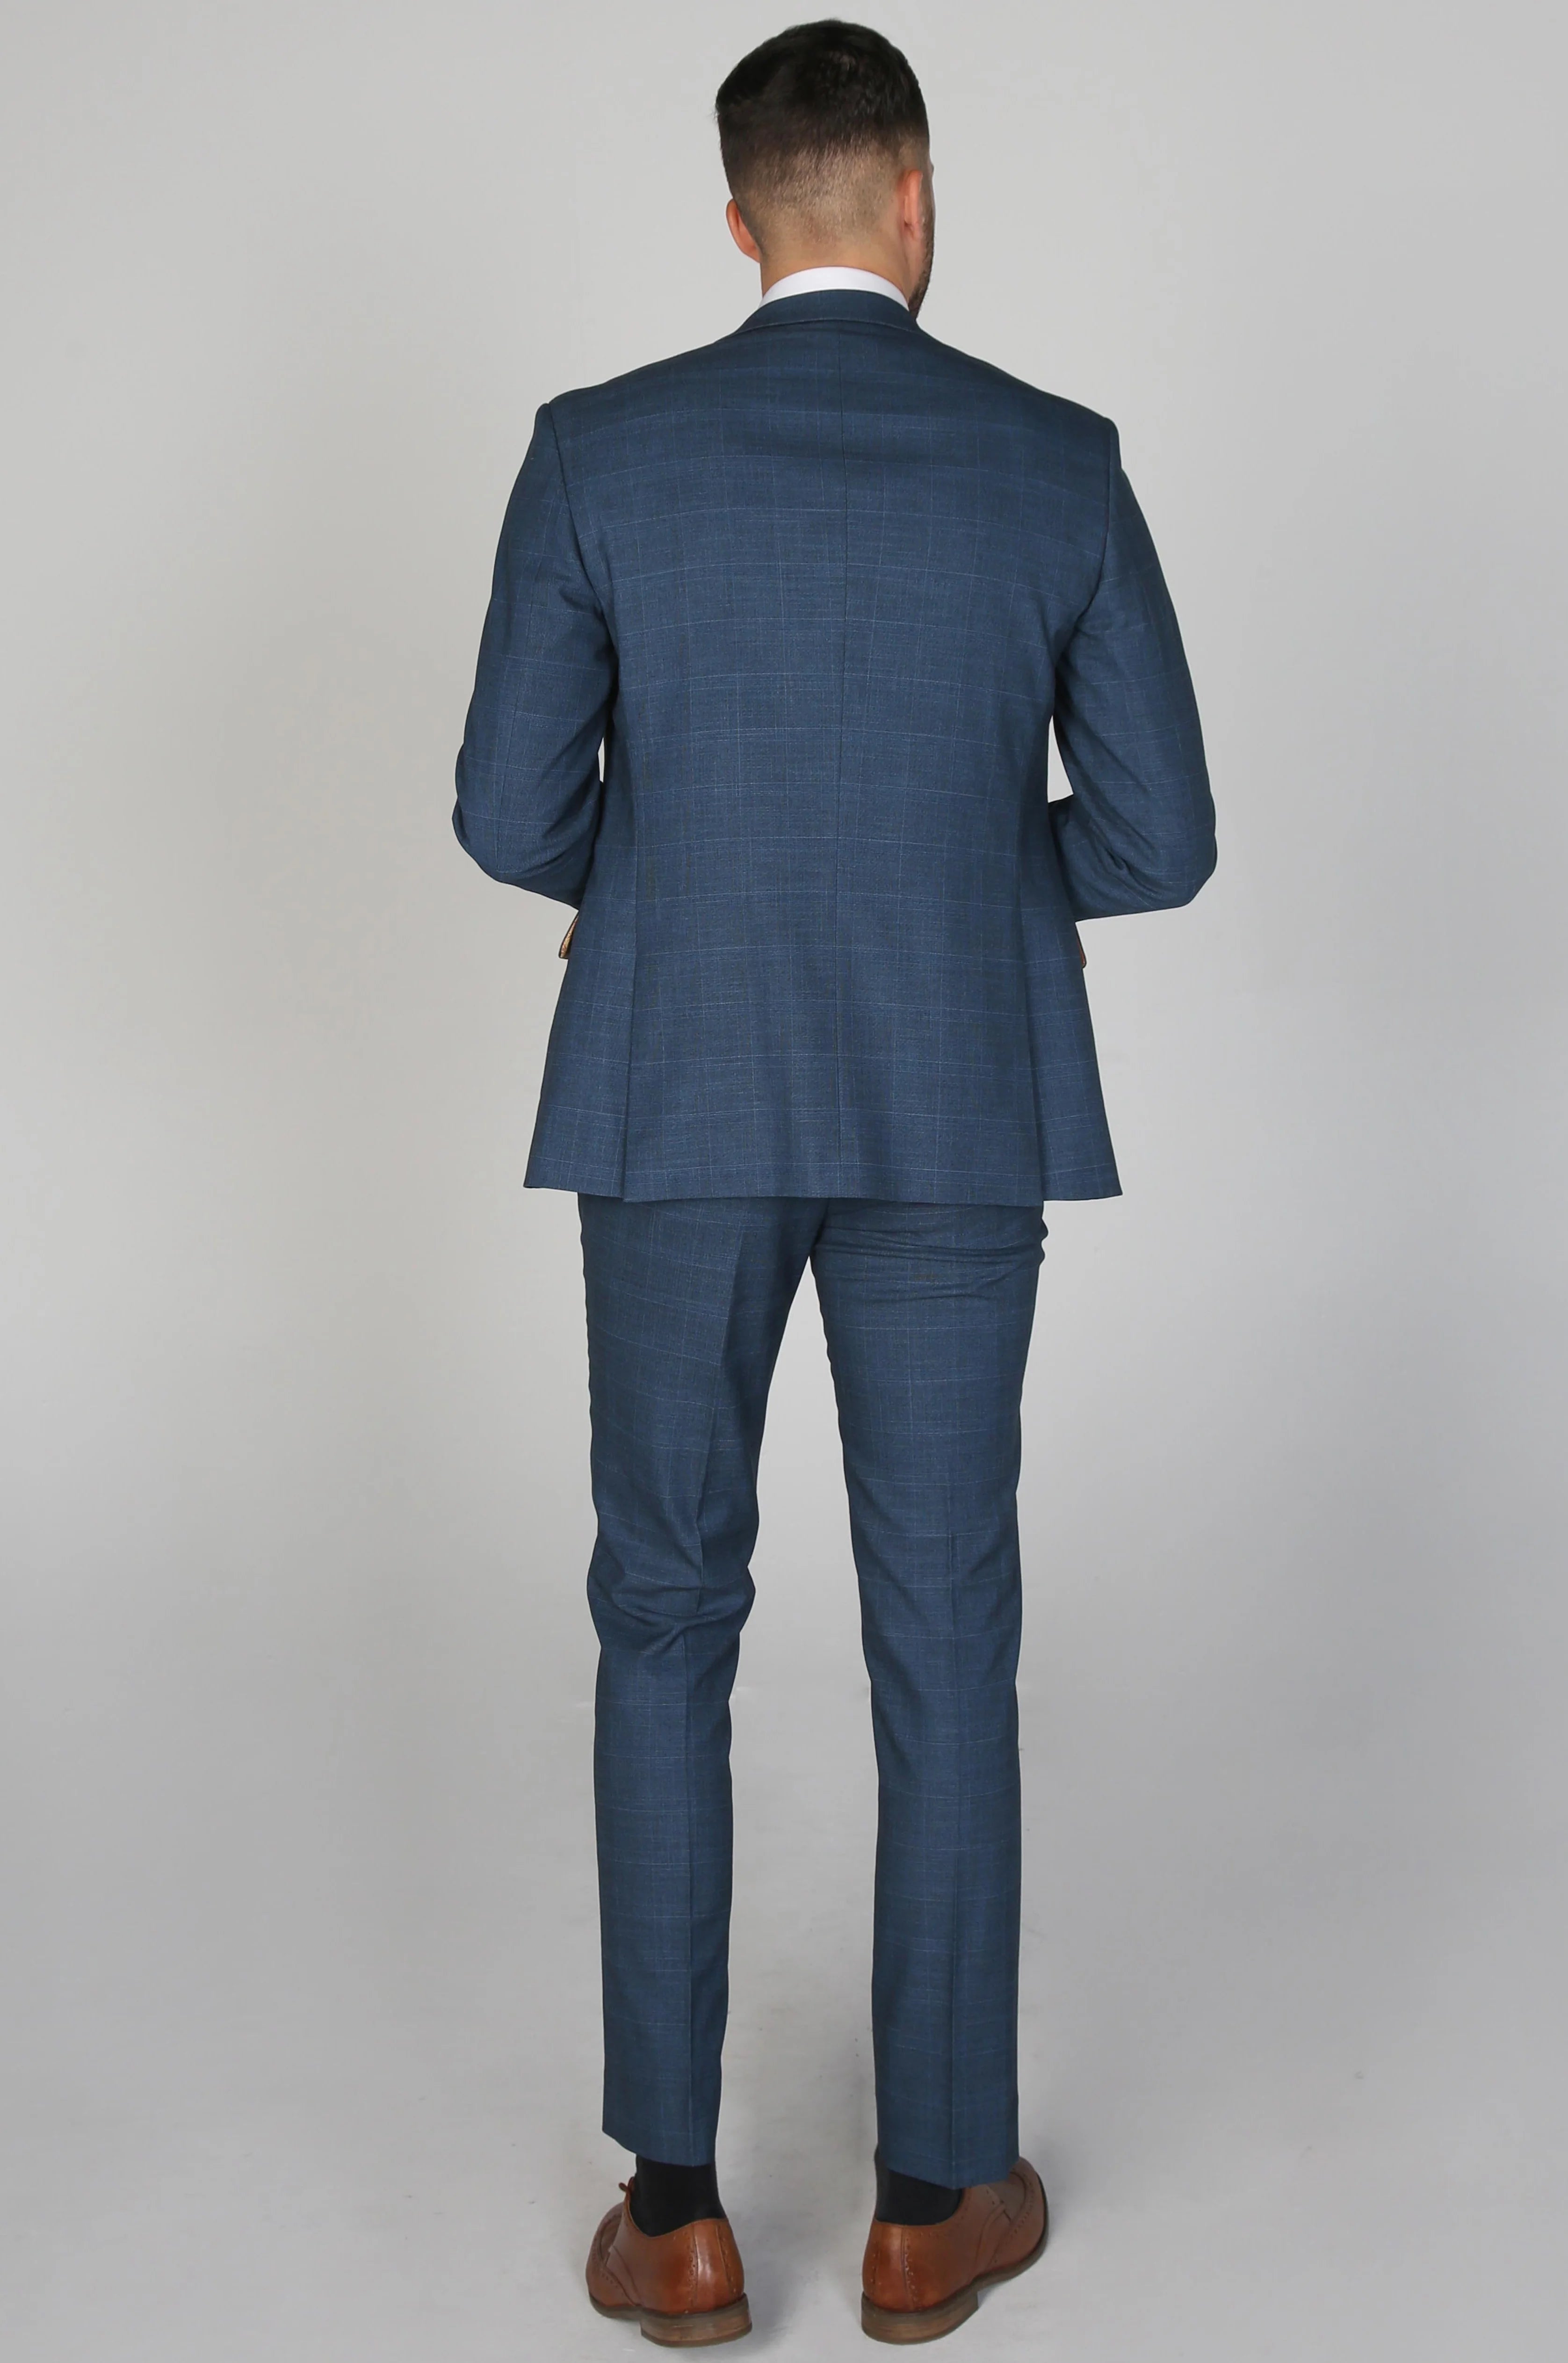 Paul Andrew -Viceroy Navy Men's Three Piece Suit